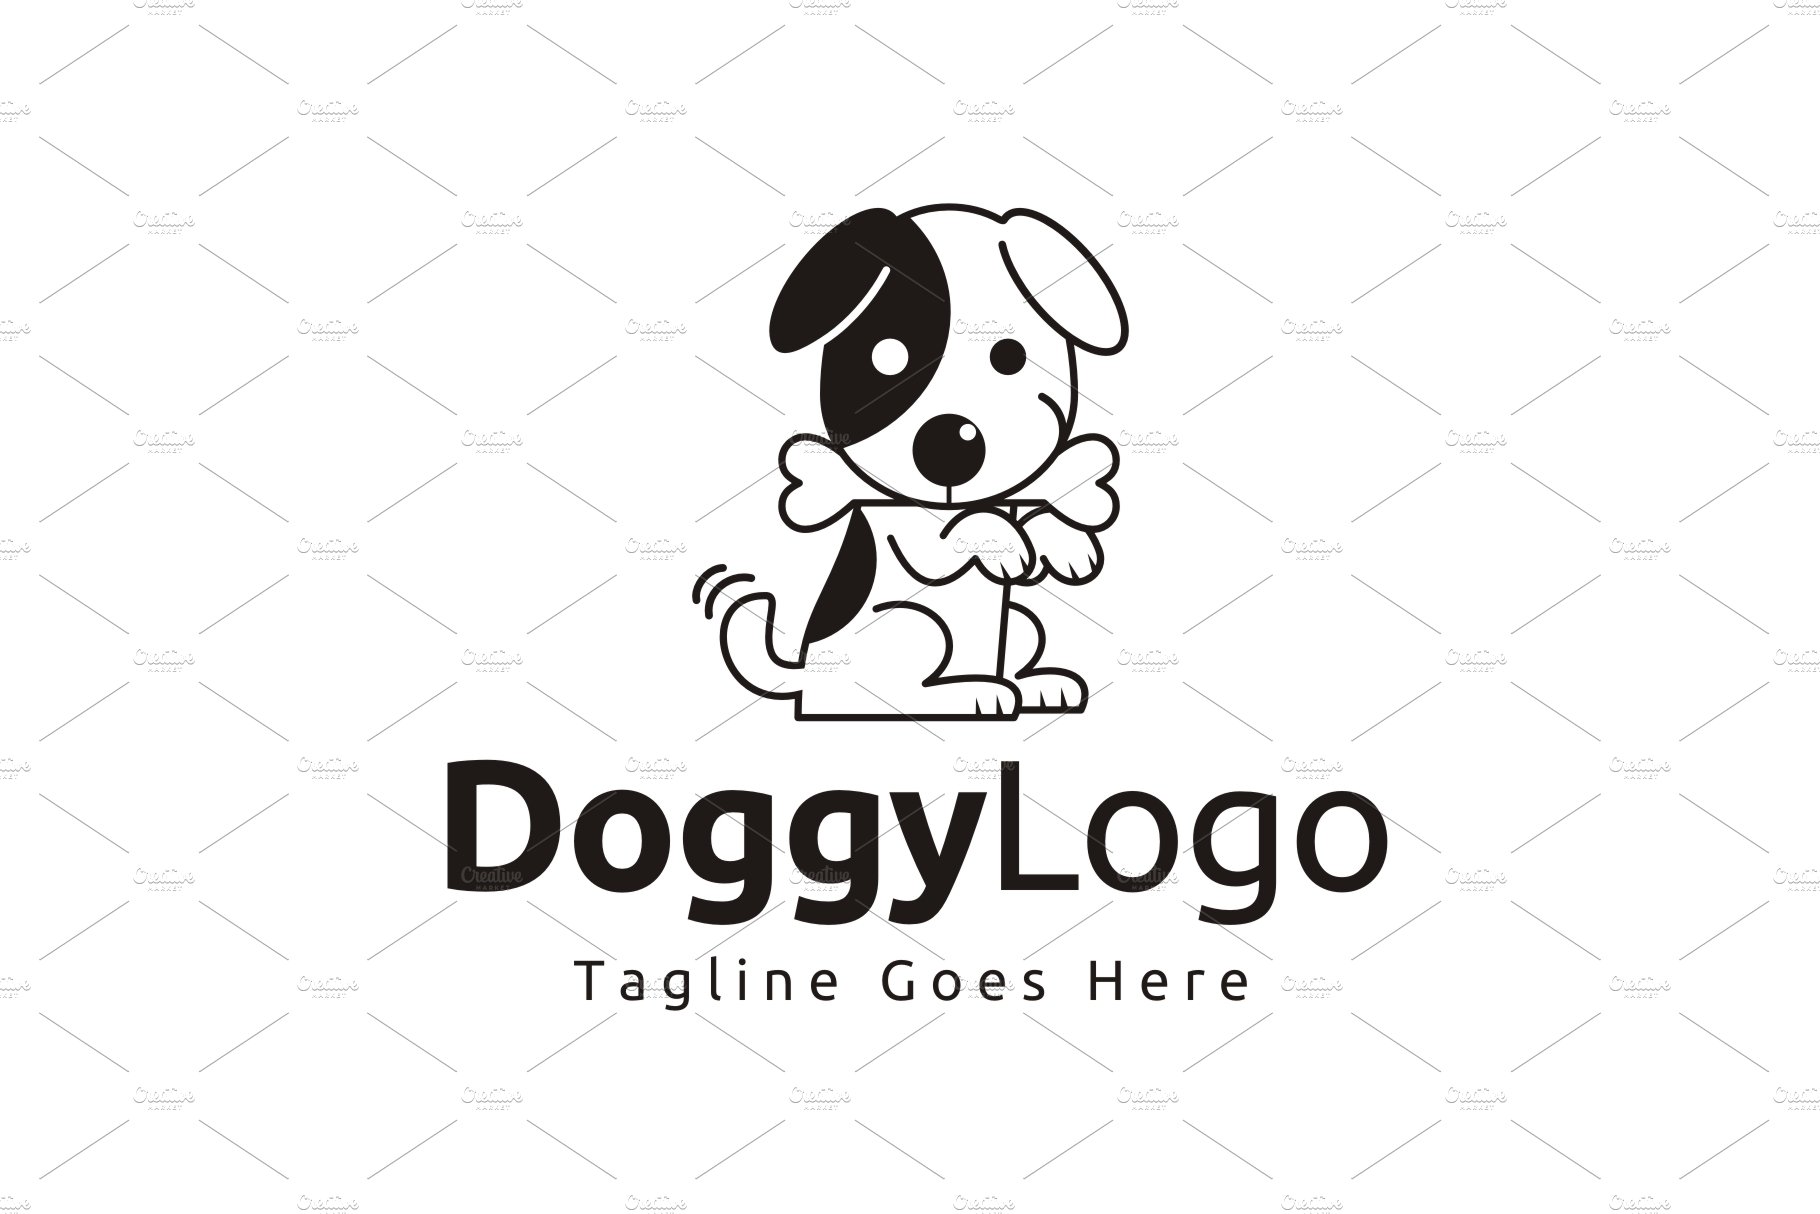 doggy logo 3 868